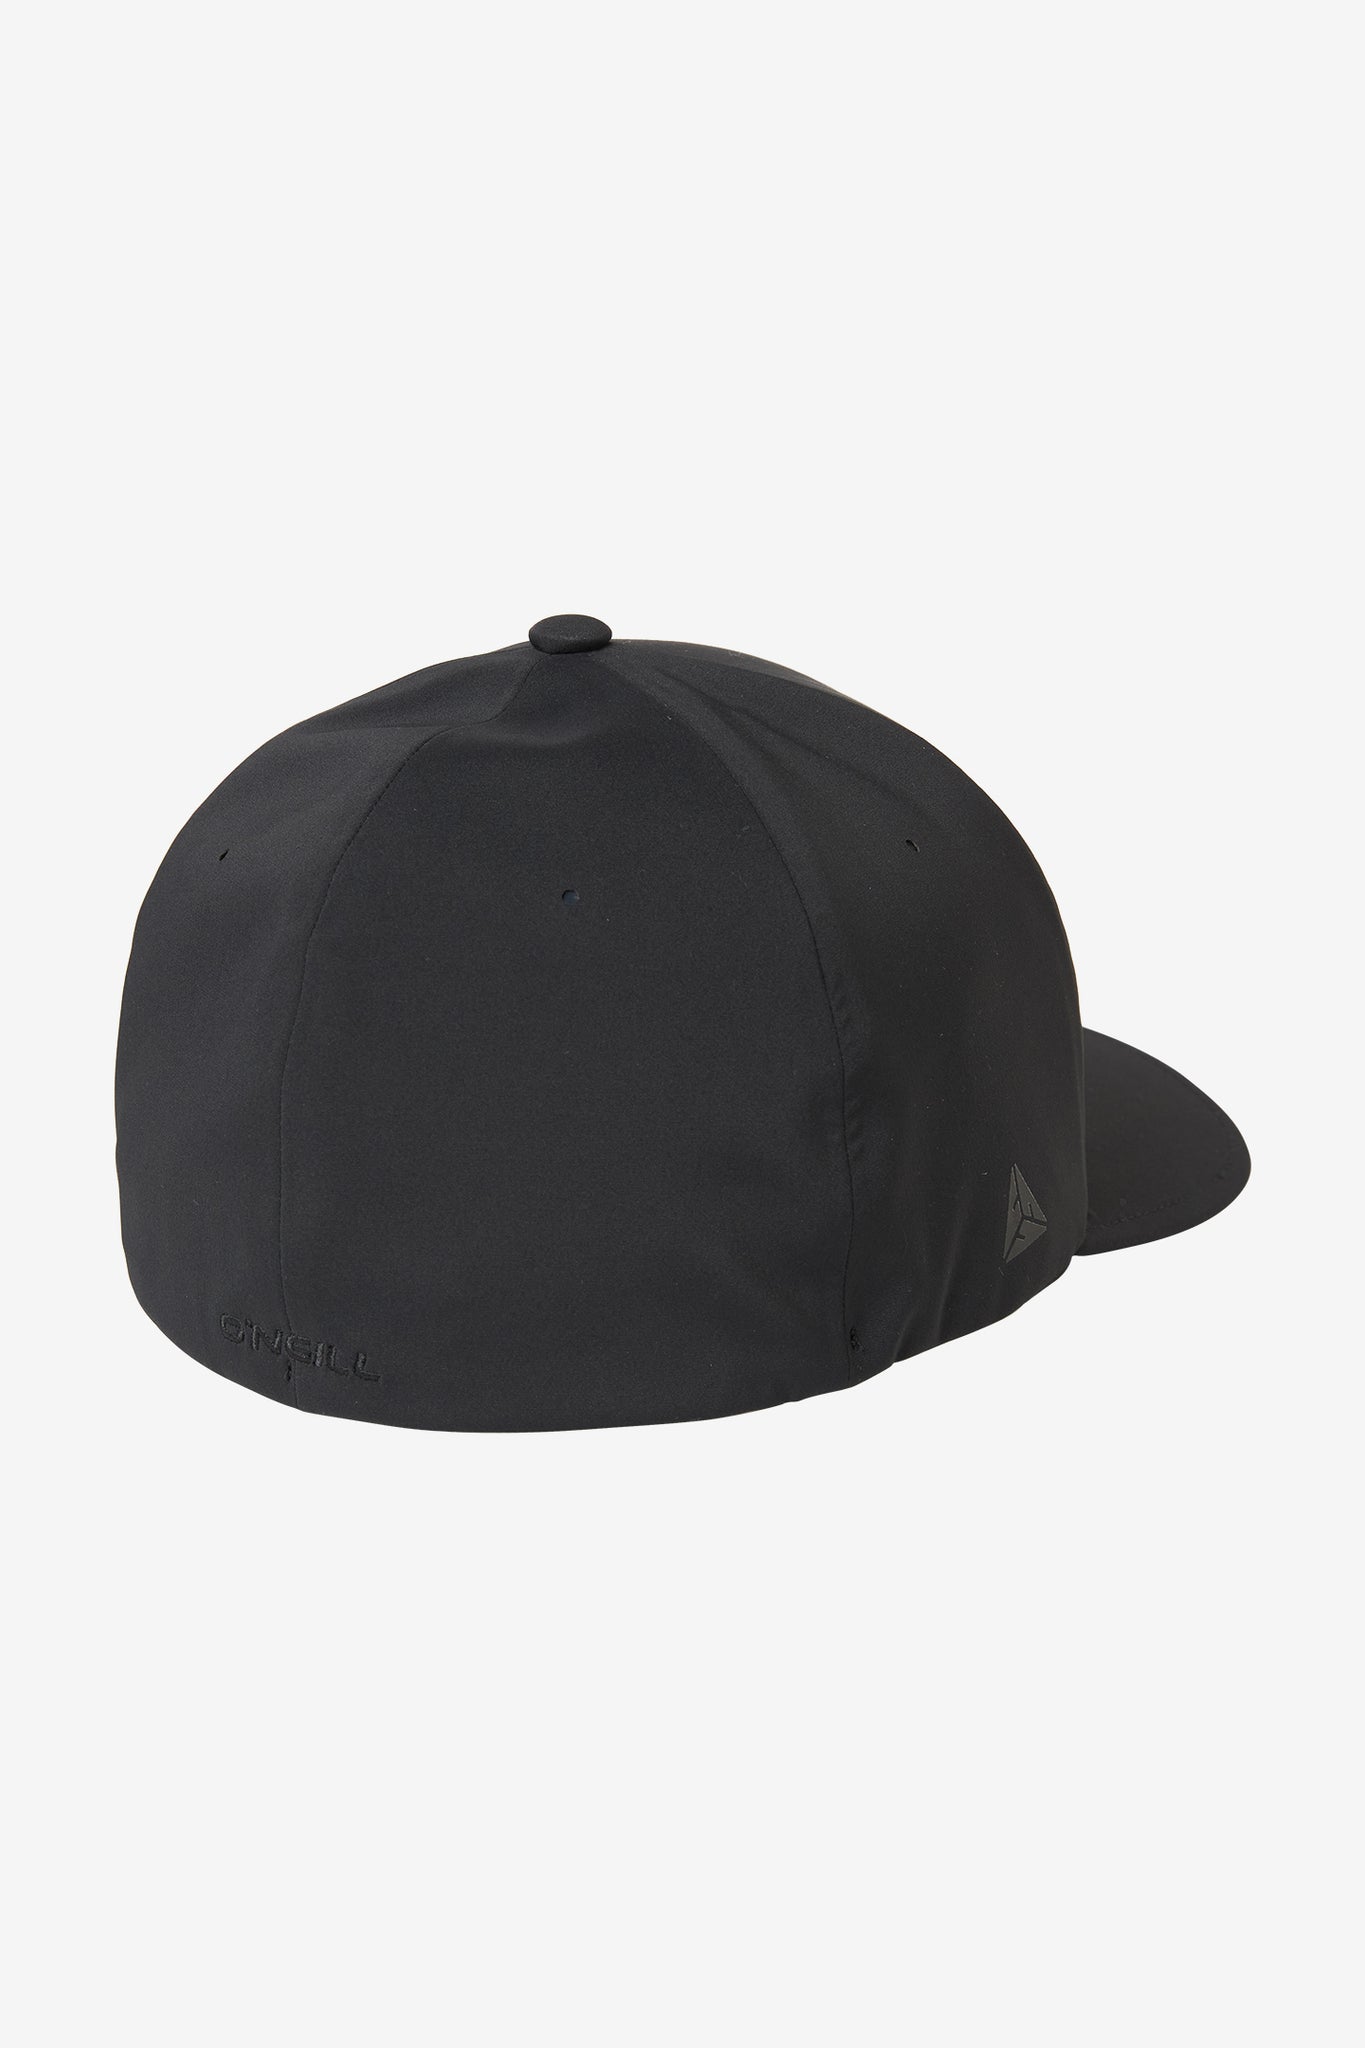 O'Neill: Hybrid Stretch Hat Black / S/M